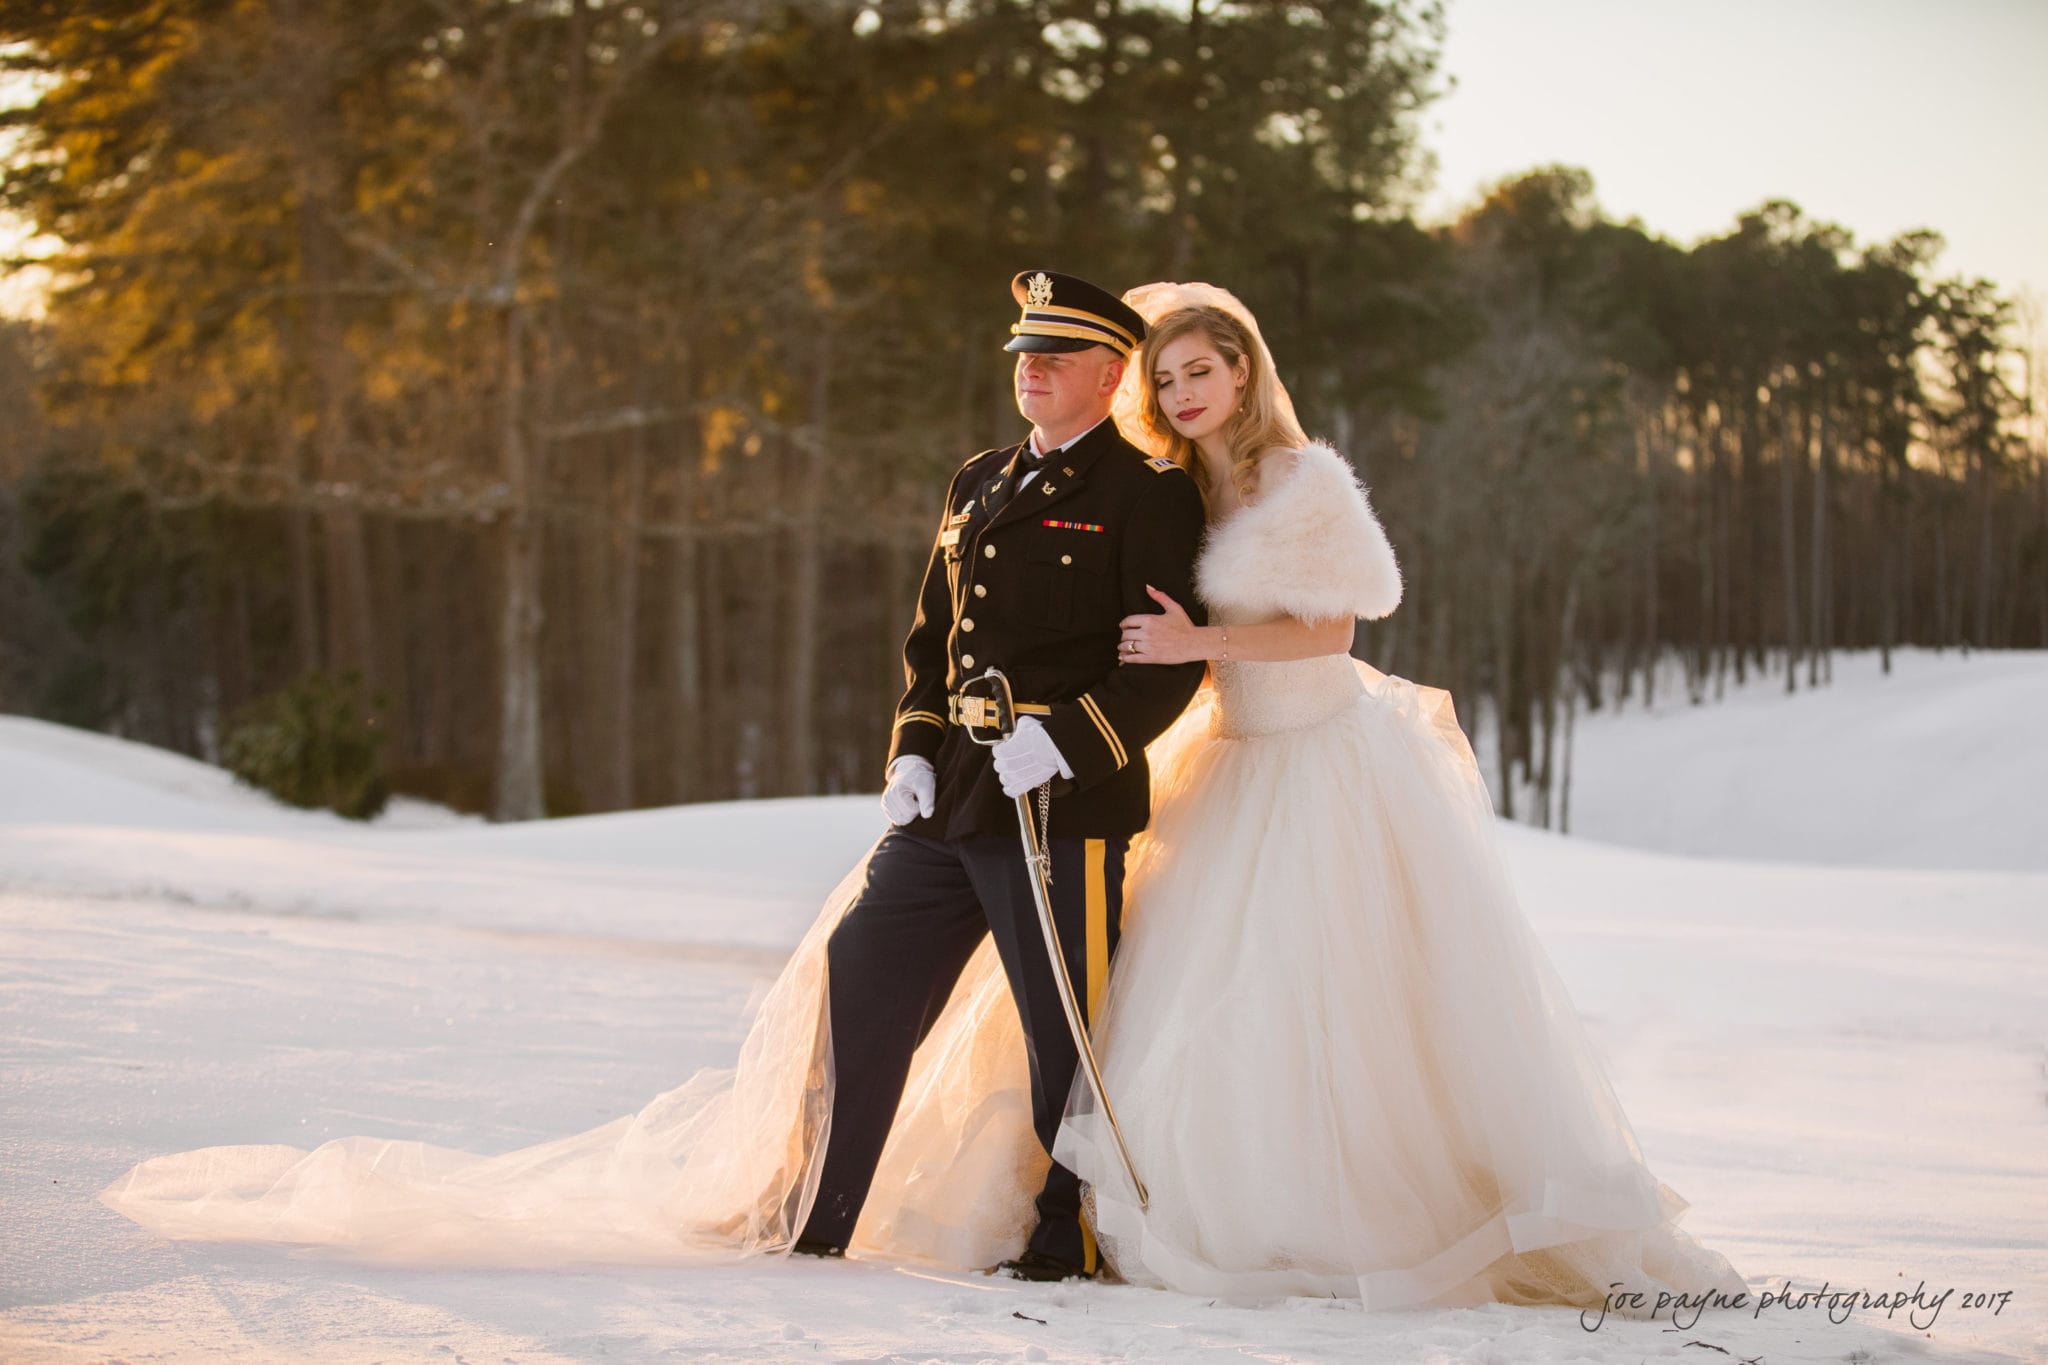 Snowy duke chapel wedding photography - couple in snow